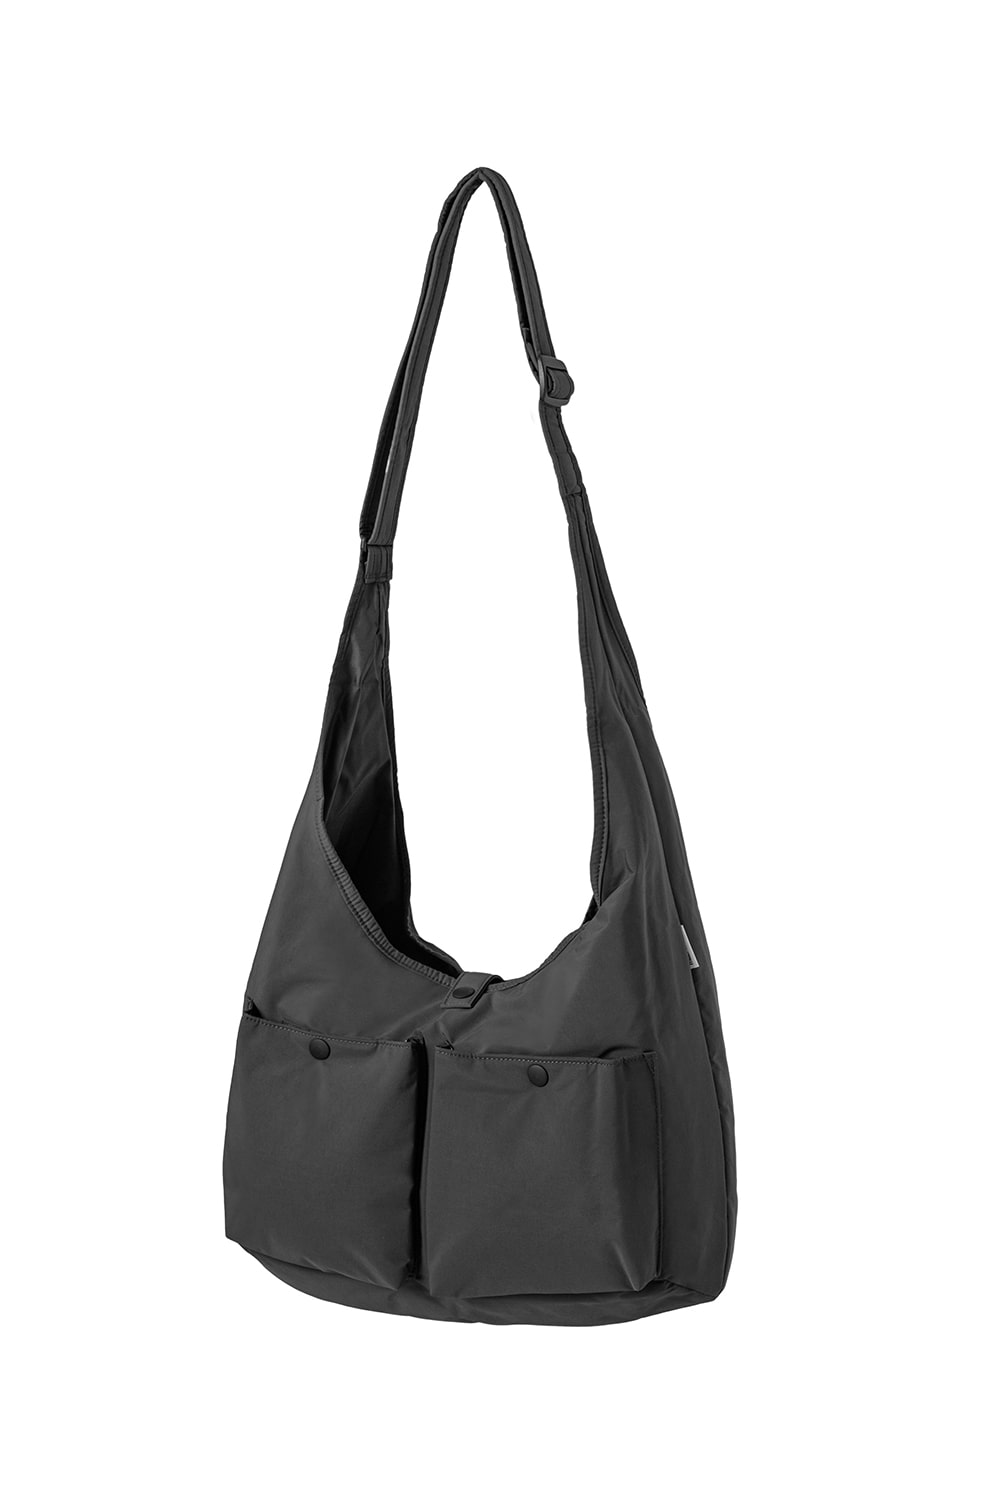 padded bore bag cross (grey)